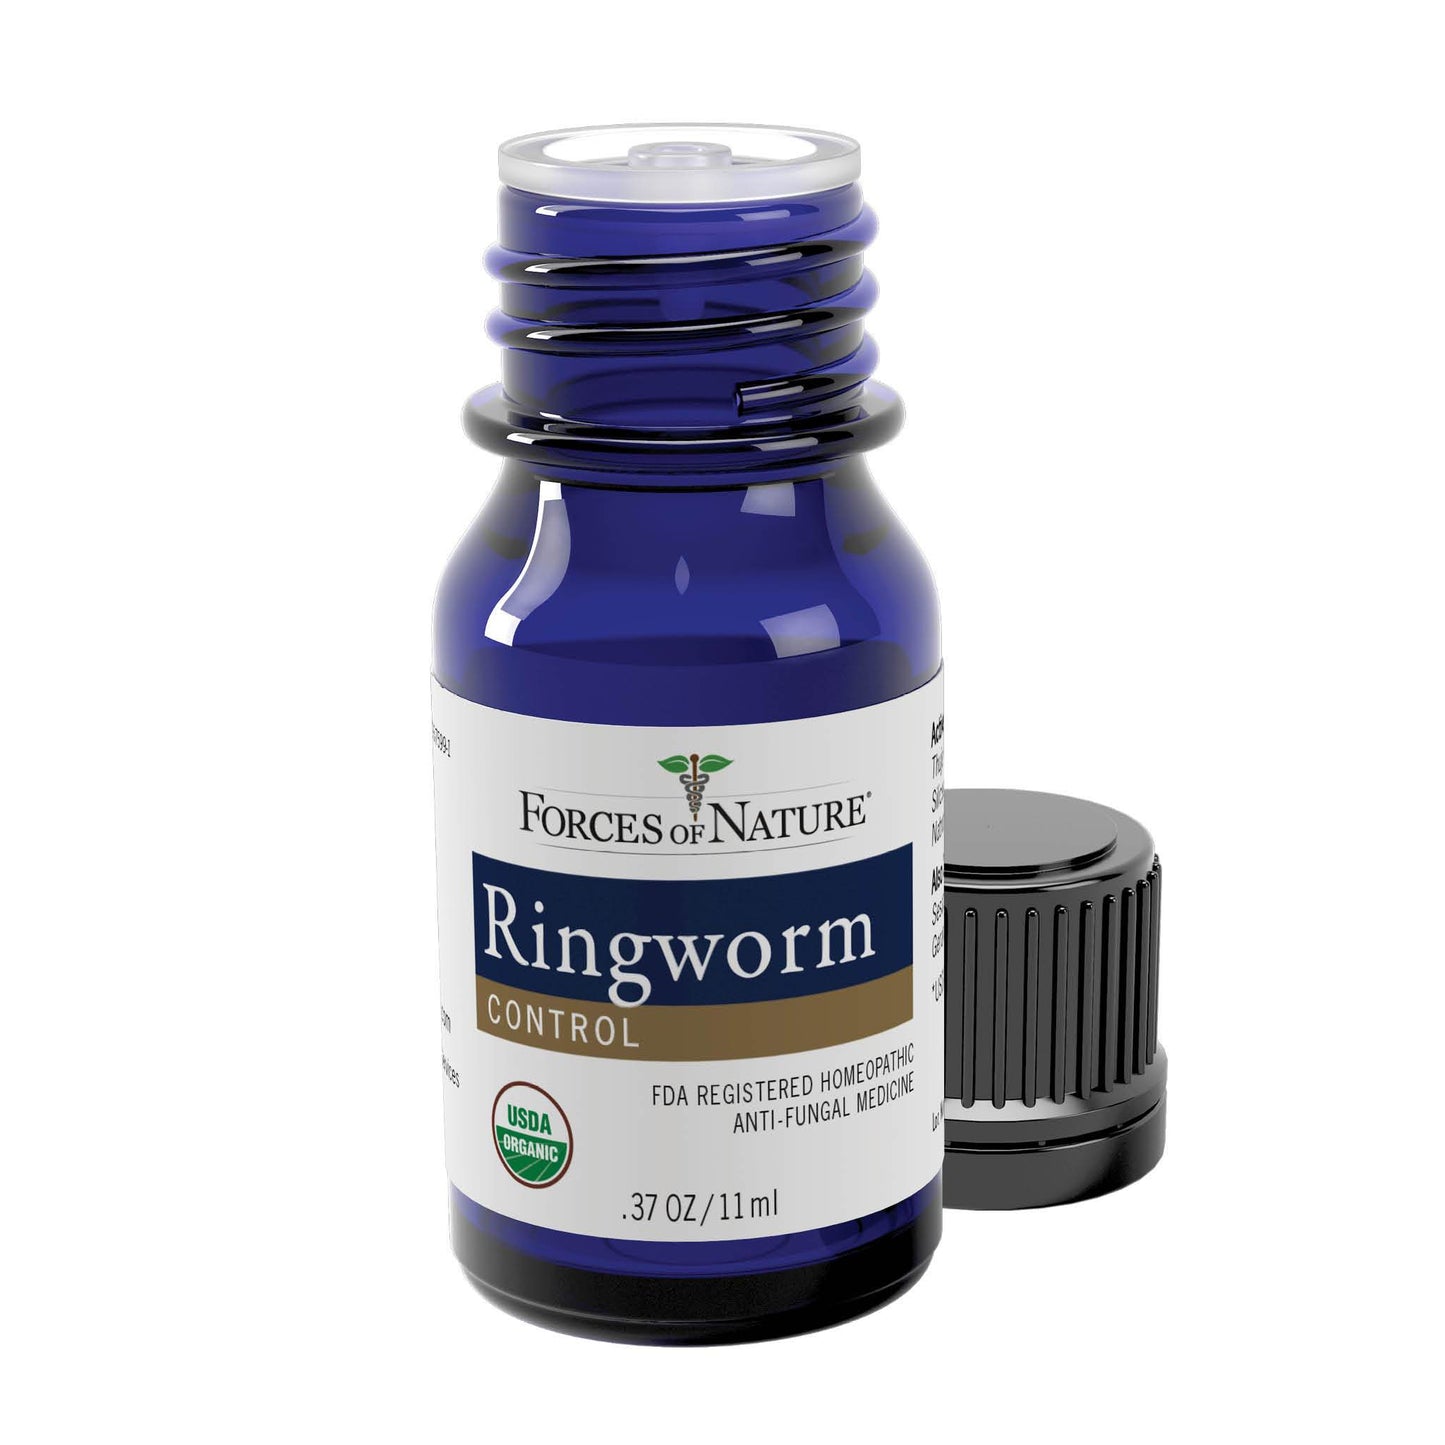 Ringworm Antifungal Remedy